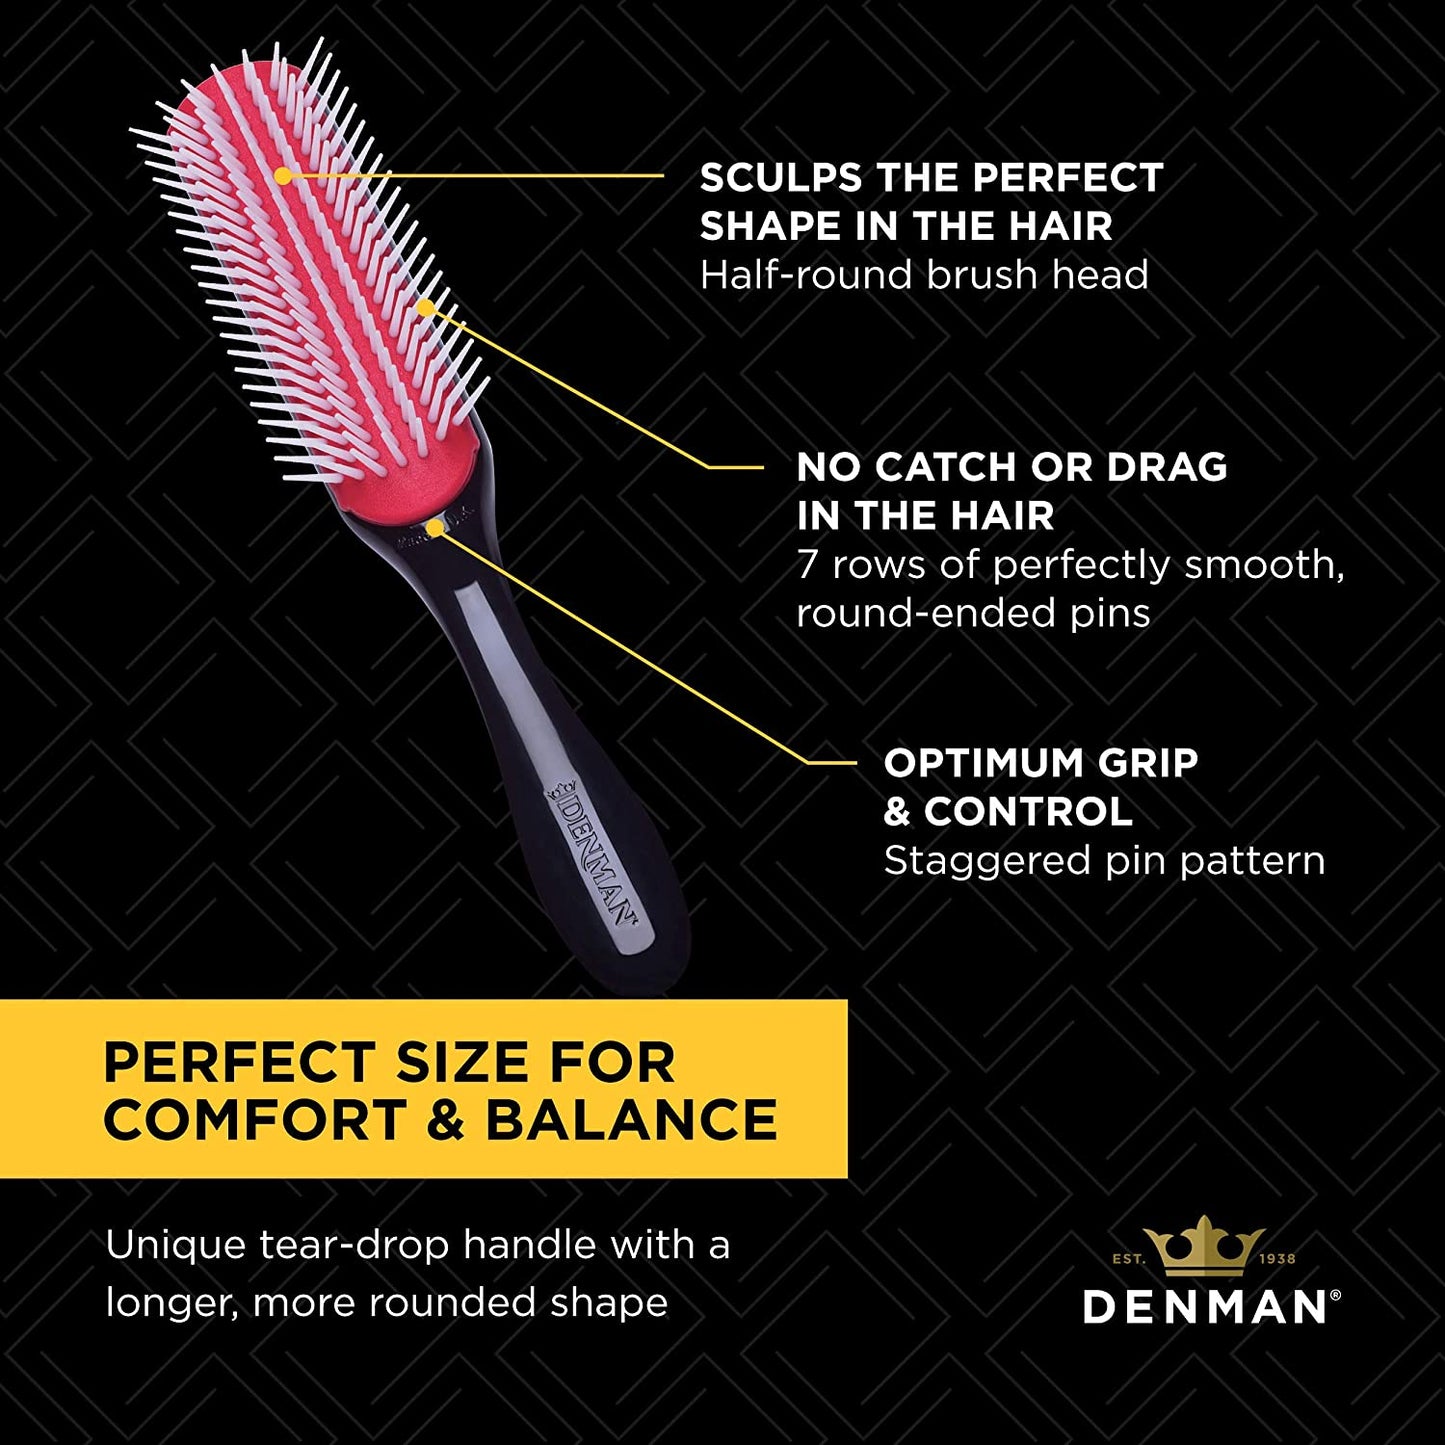 Denman Hair Brush for Curly Hair D3 (Black) 7 Row Classic